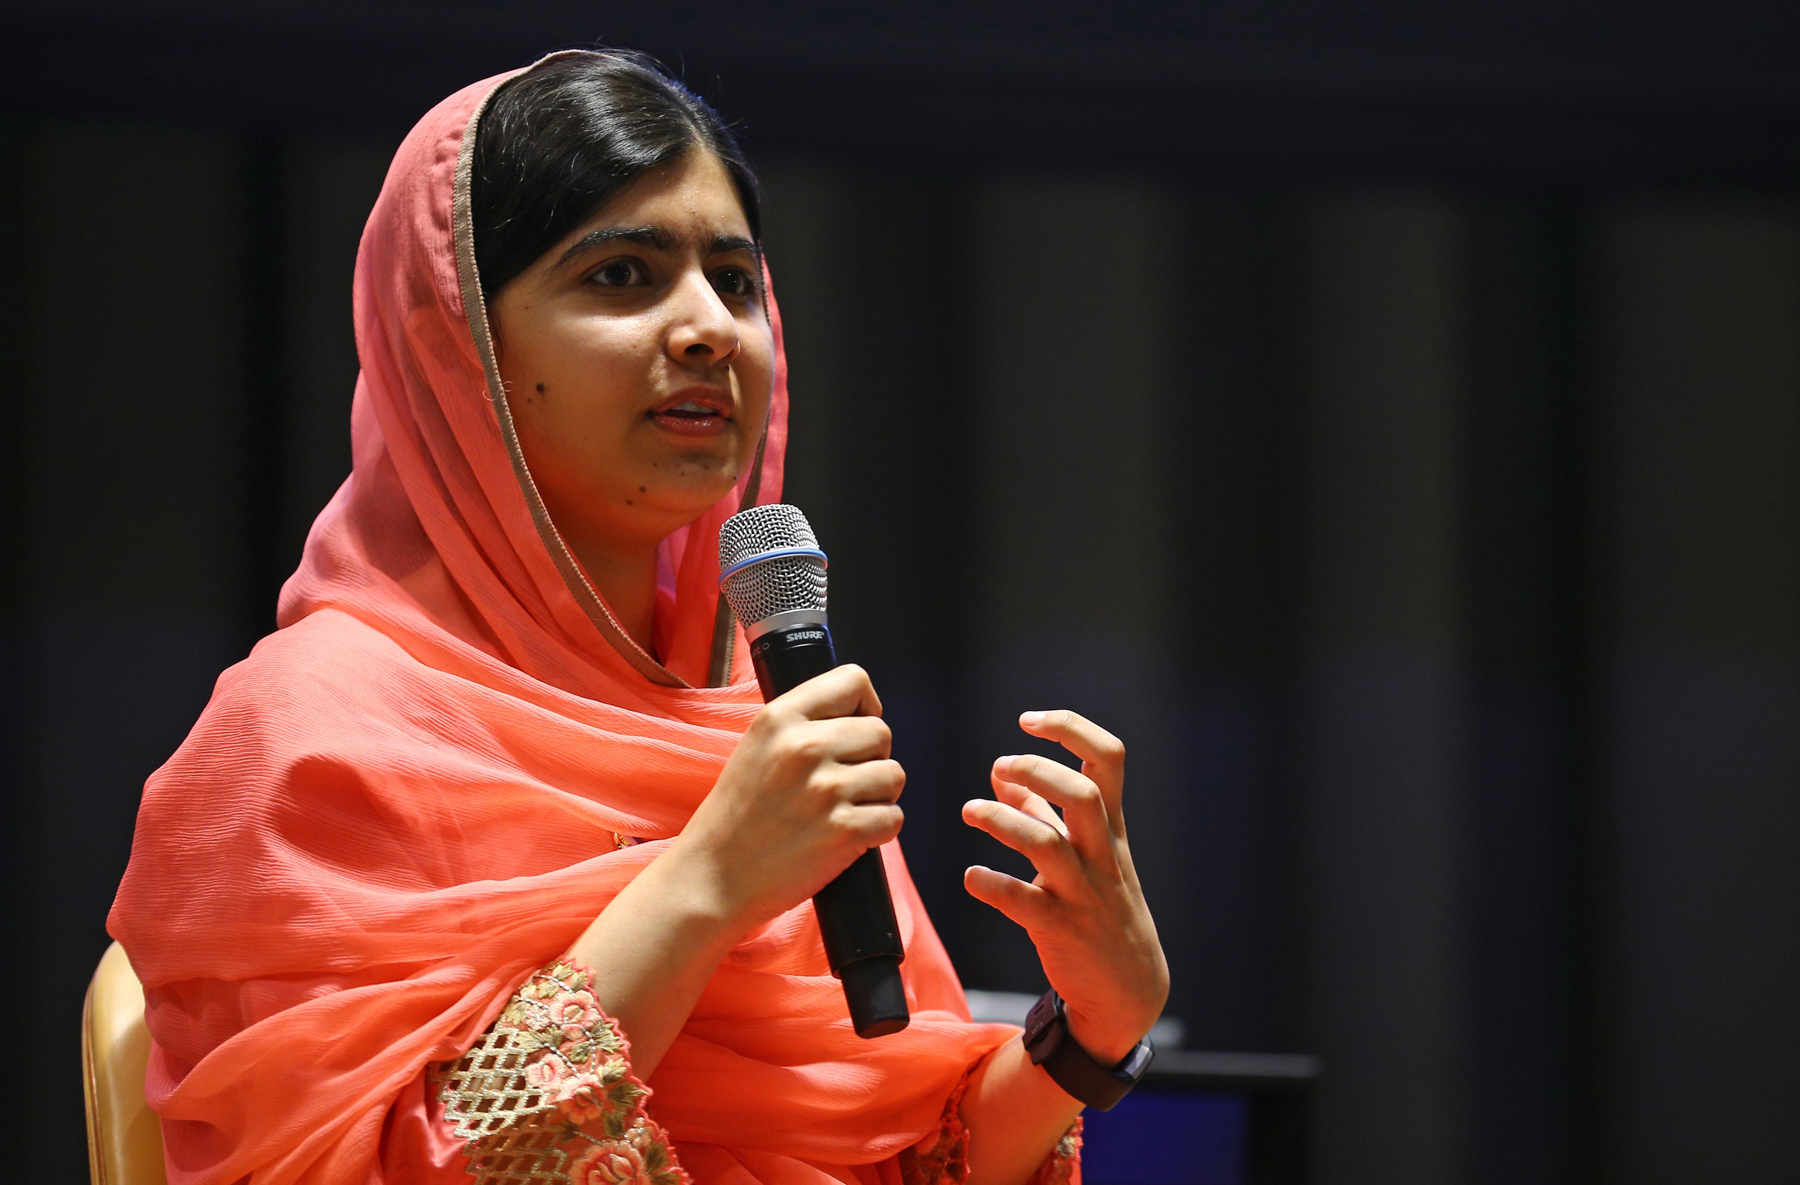 Mujeres ejemplo (I): Malala Yousafzai